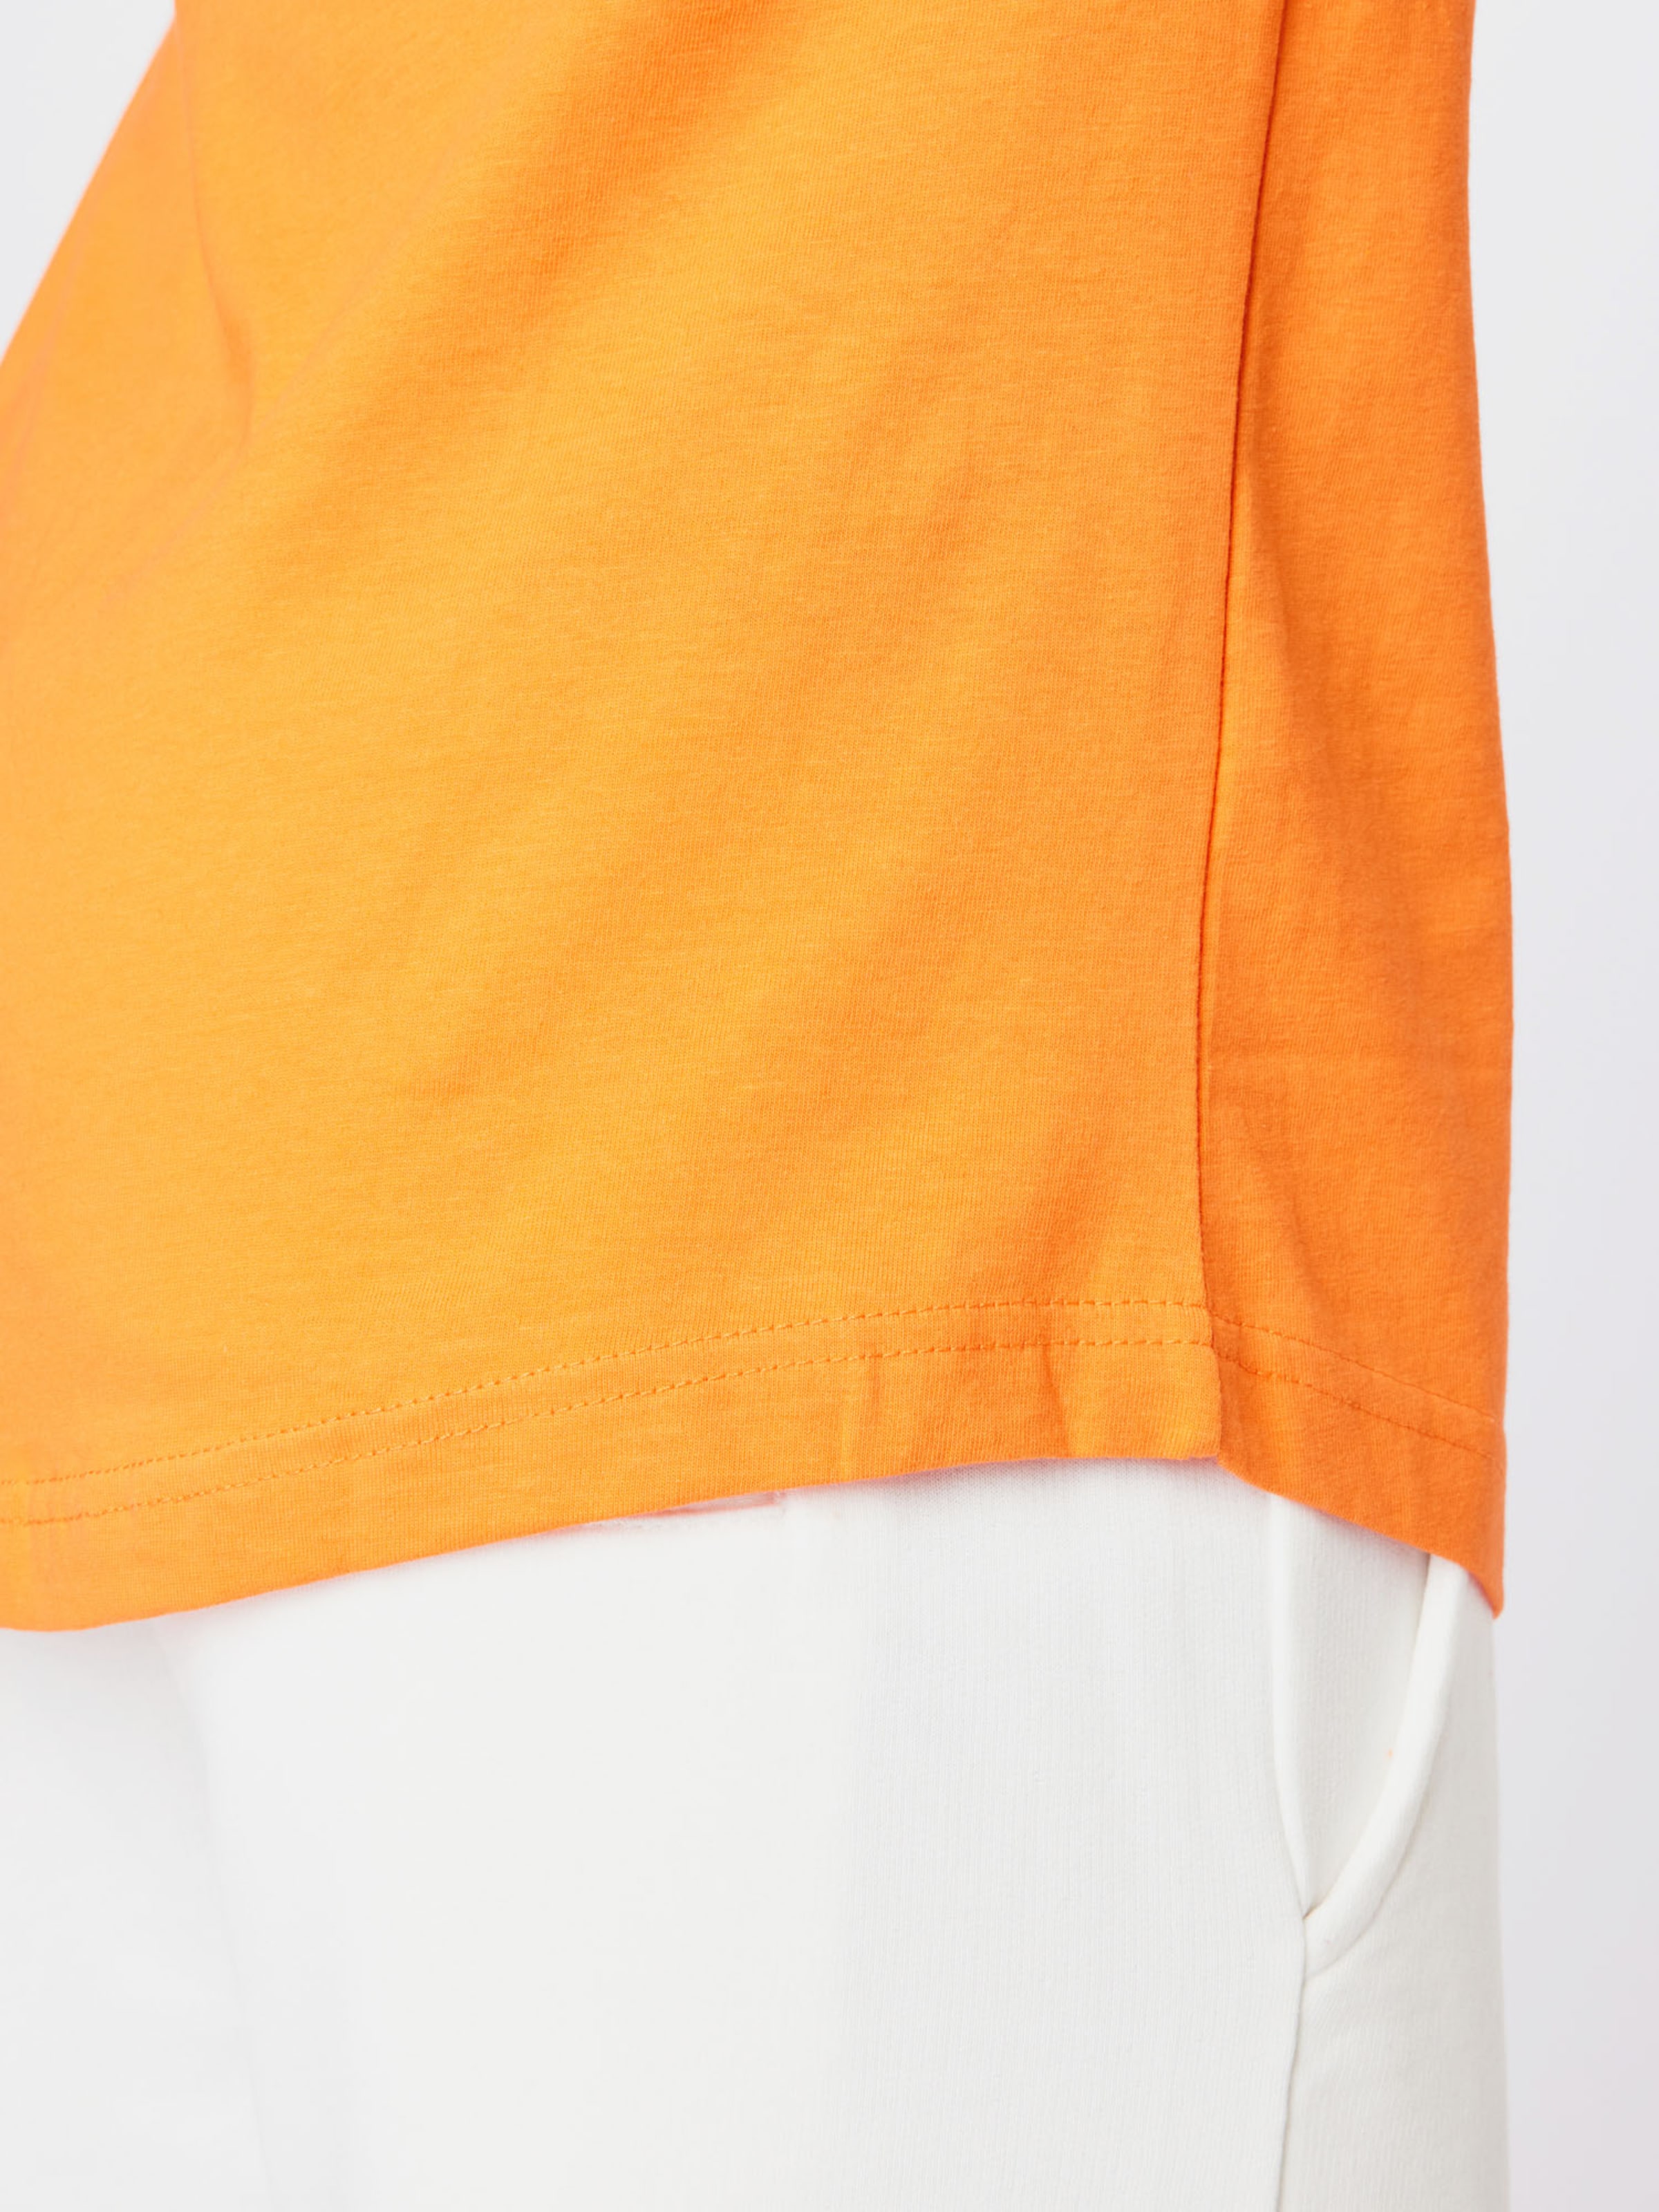 Männer Shirts Urban Classics Shirt in Orange, Weiß - OP33016